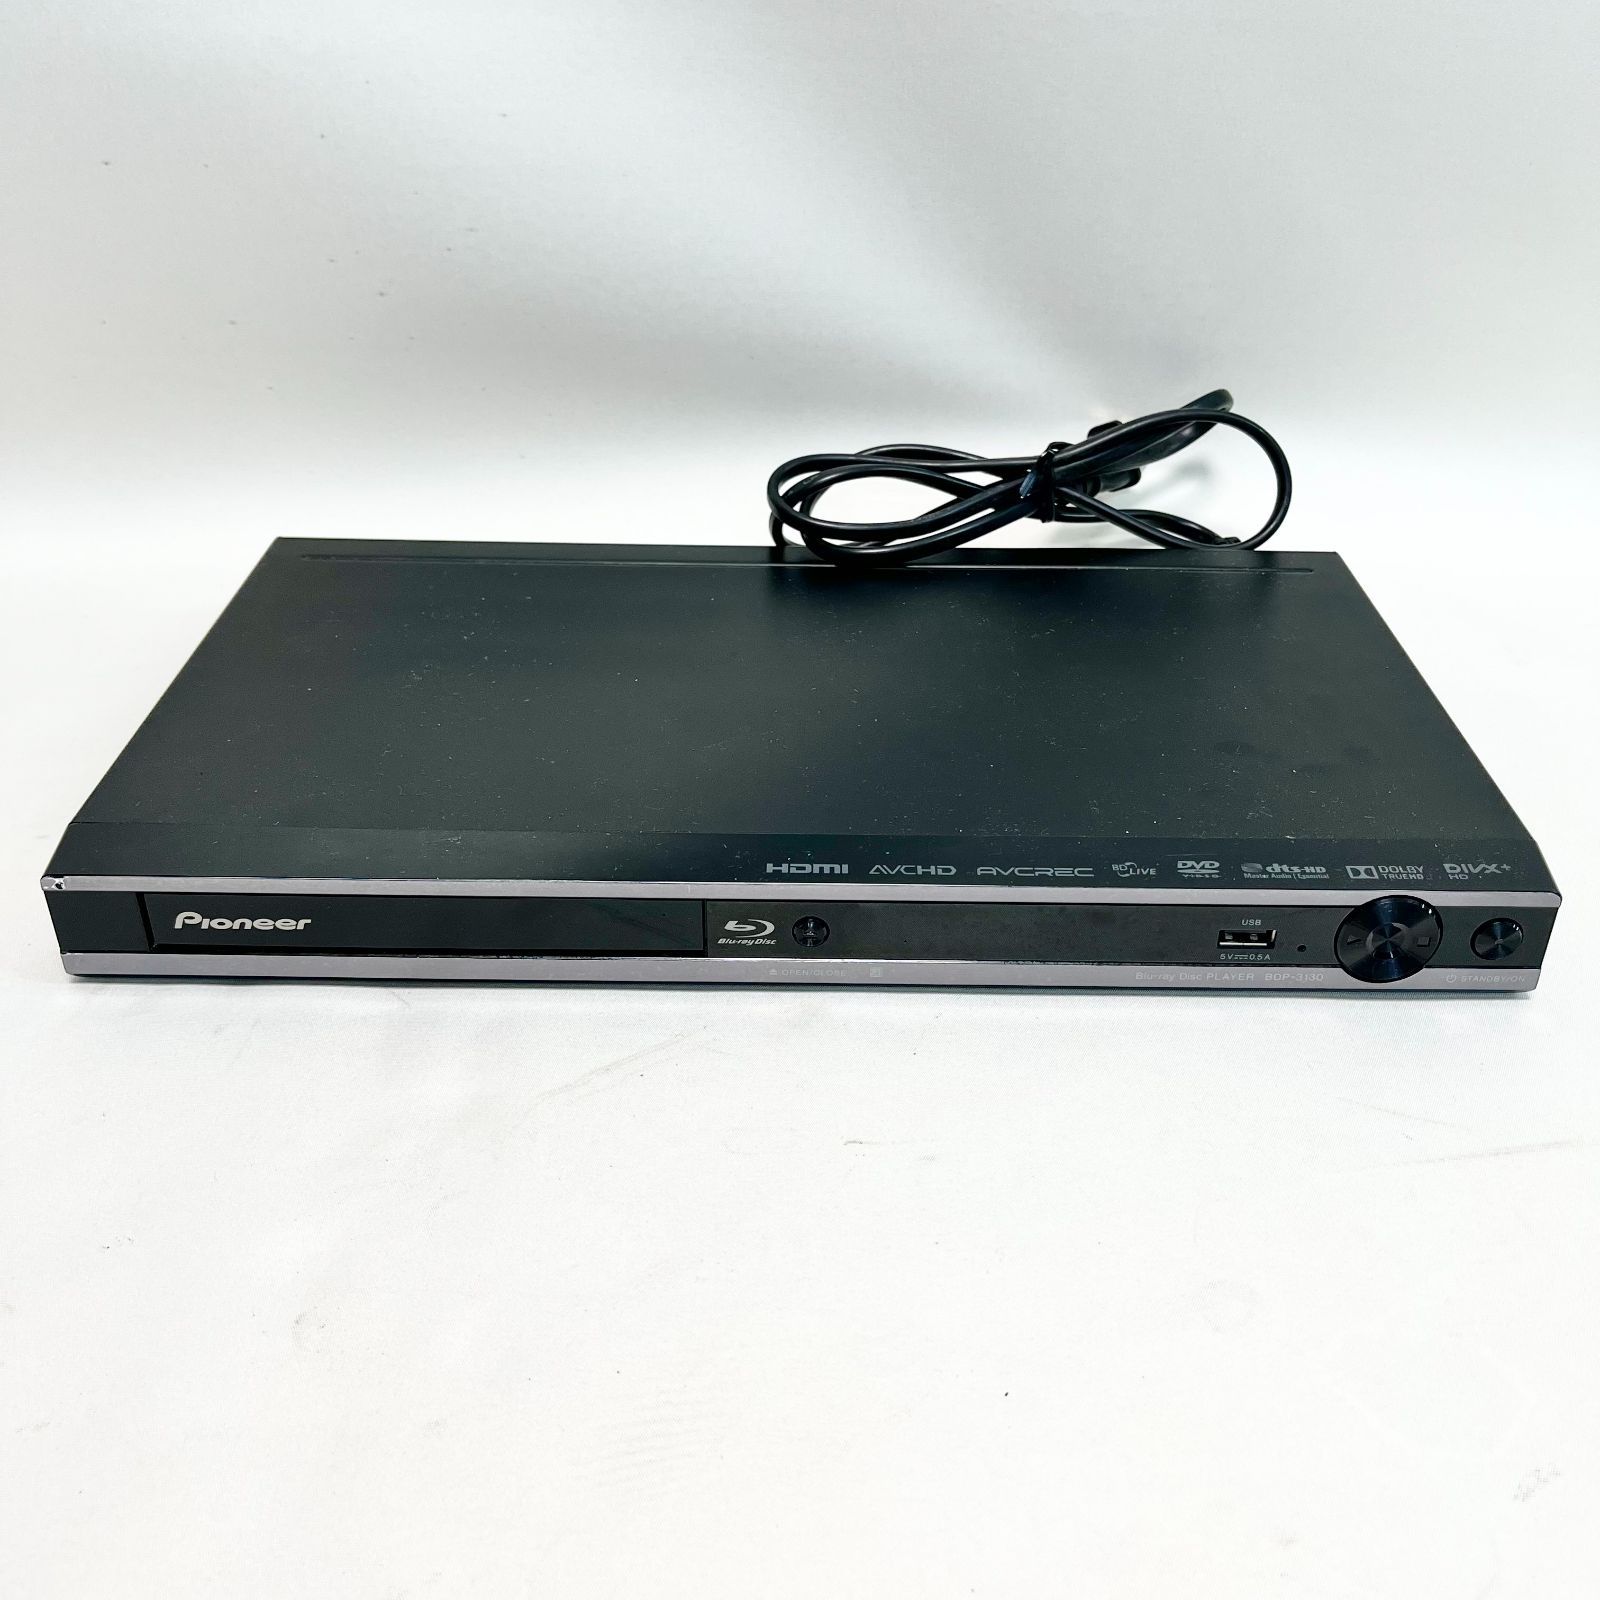 Pioneer ブルーレイディスクプレーヤー アップスケーリング機能搭載 ブラック BDP-3130-K リモコンRC-3071付属